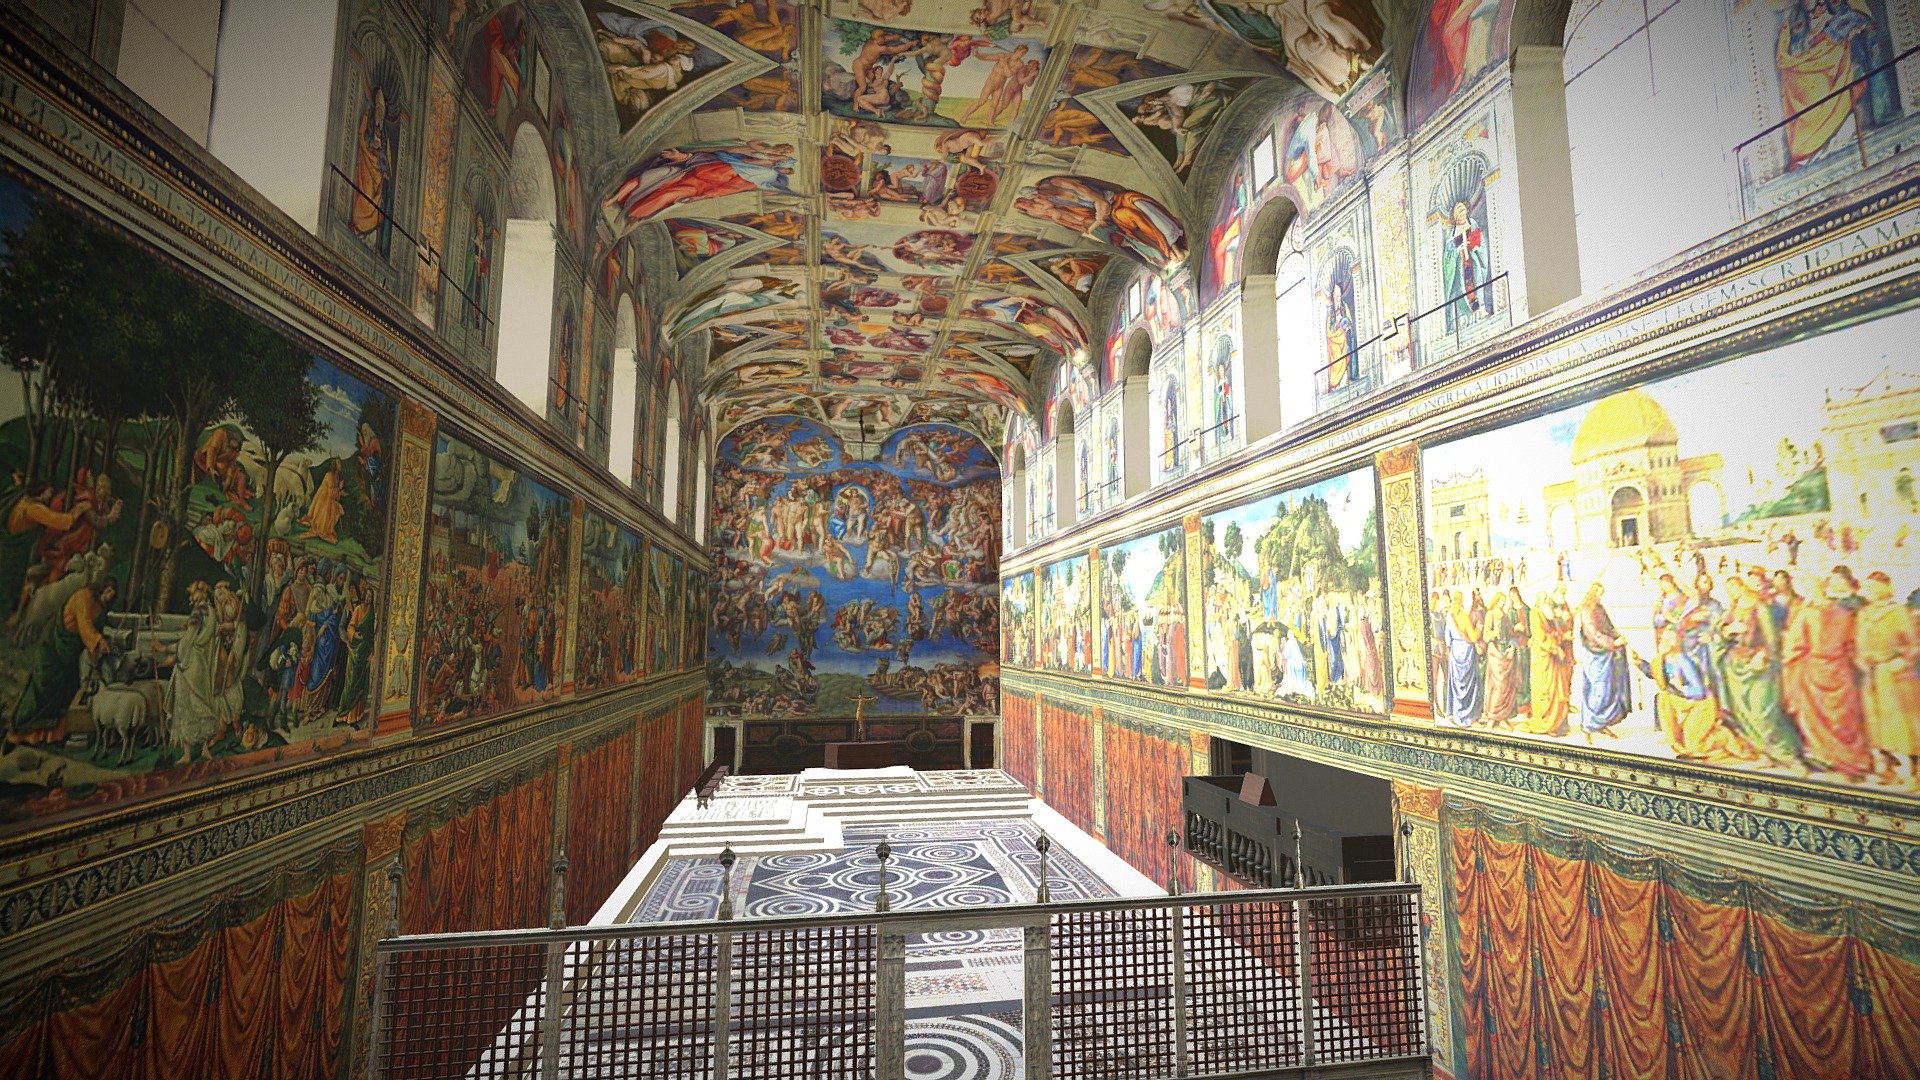 Sistine Chapel, low poly 3d model - Sistine Chapel - Buy Royalty Free 3D model by danielmikulik 3d model